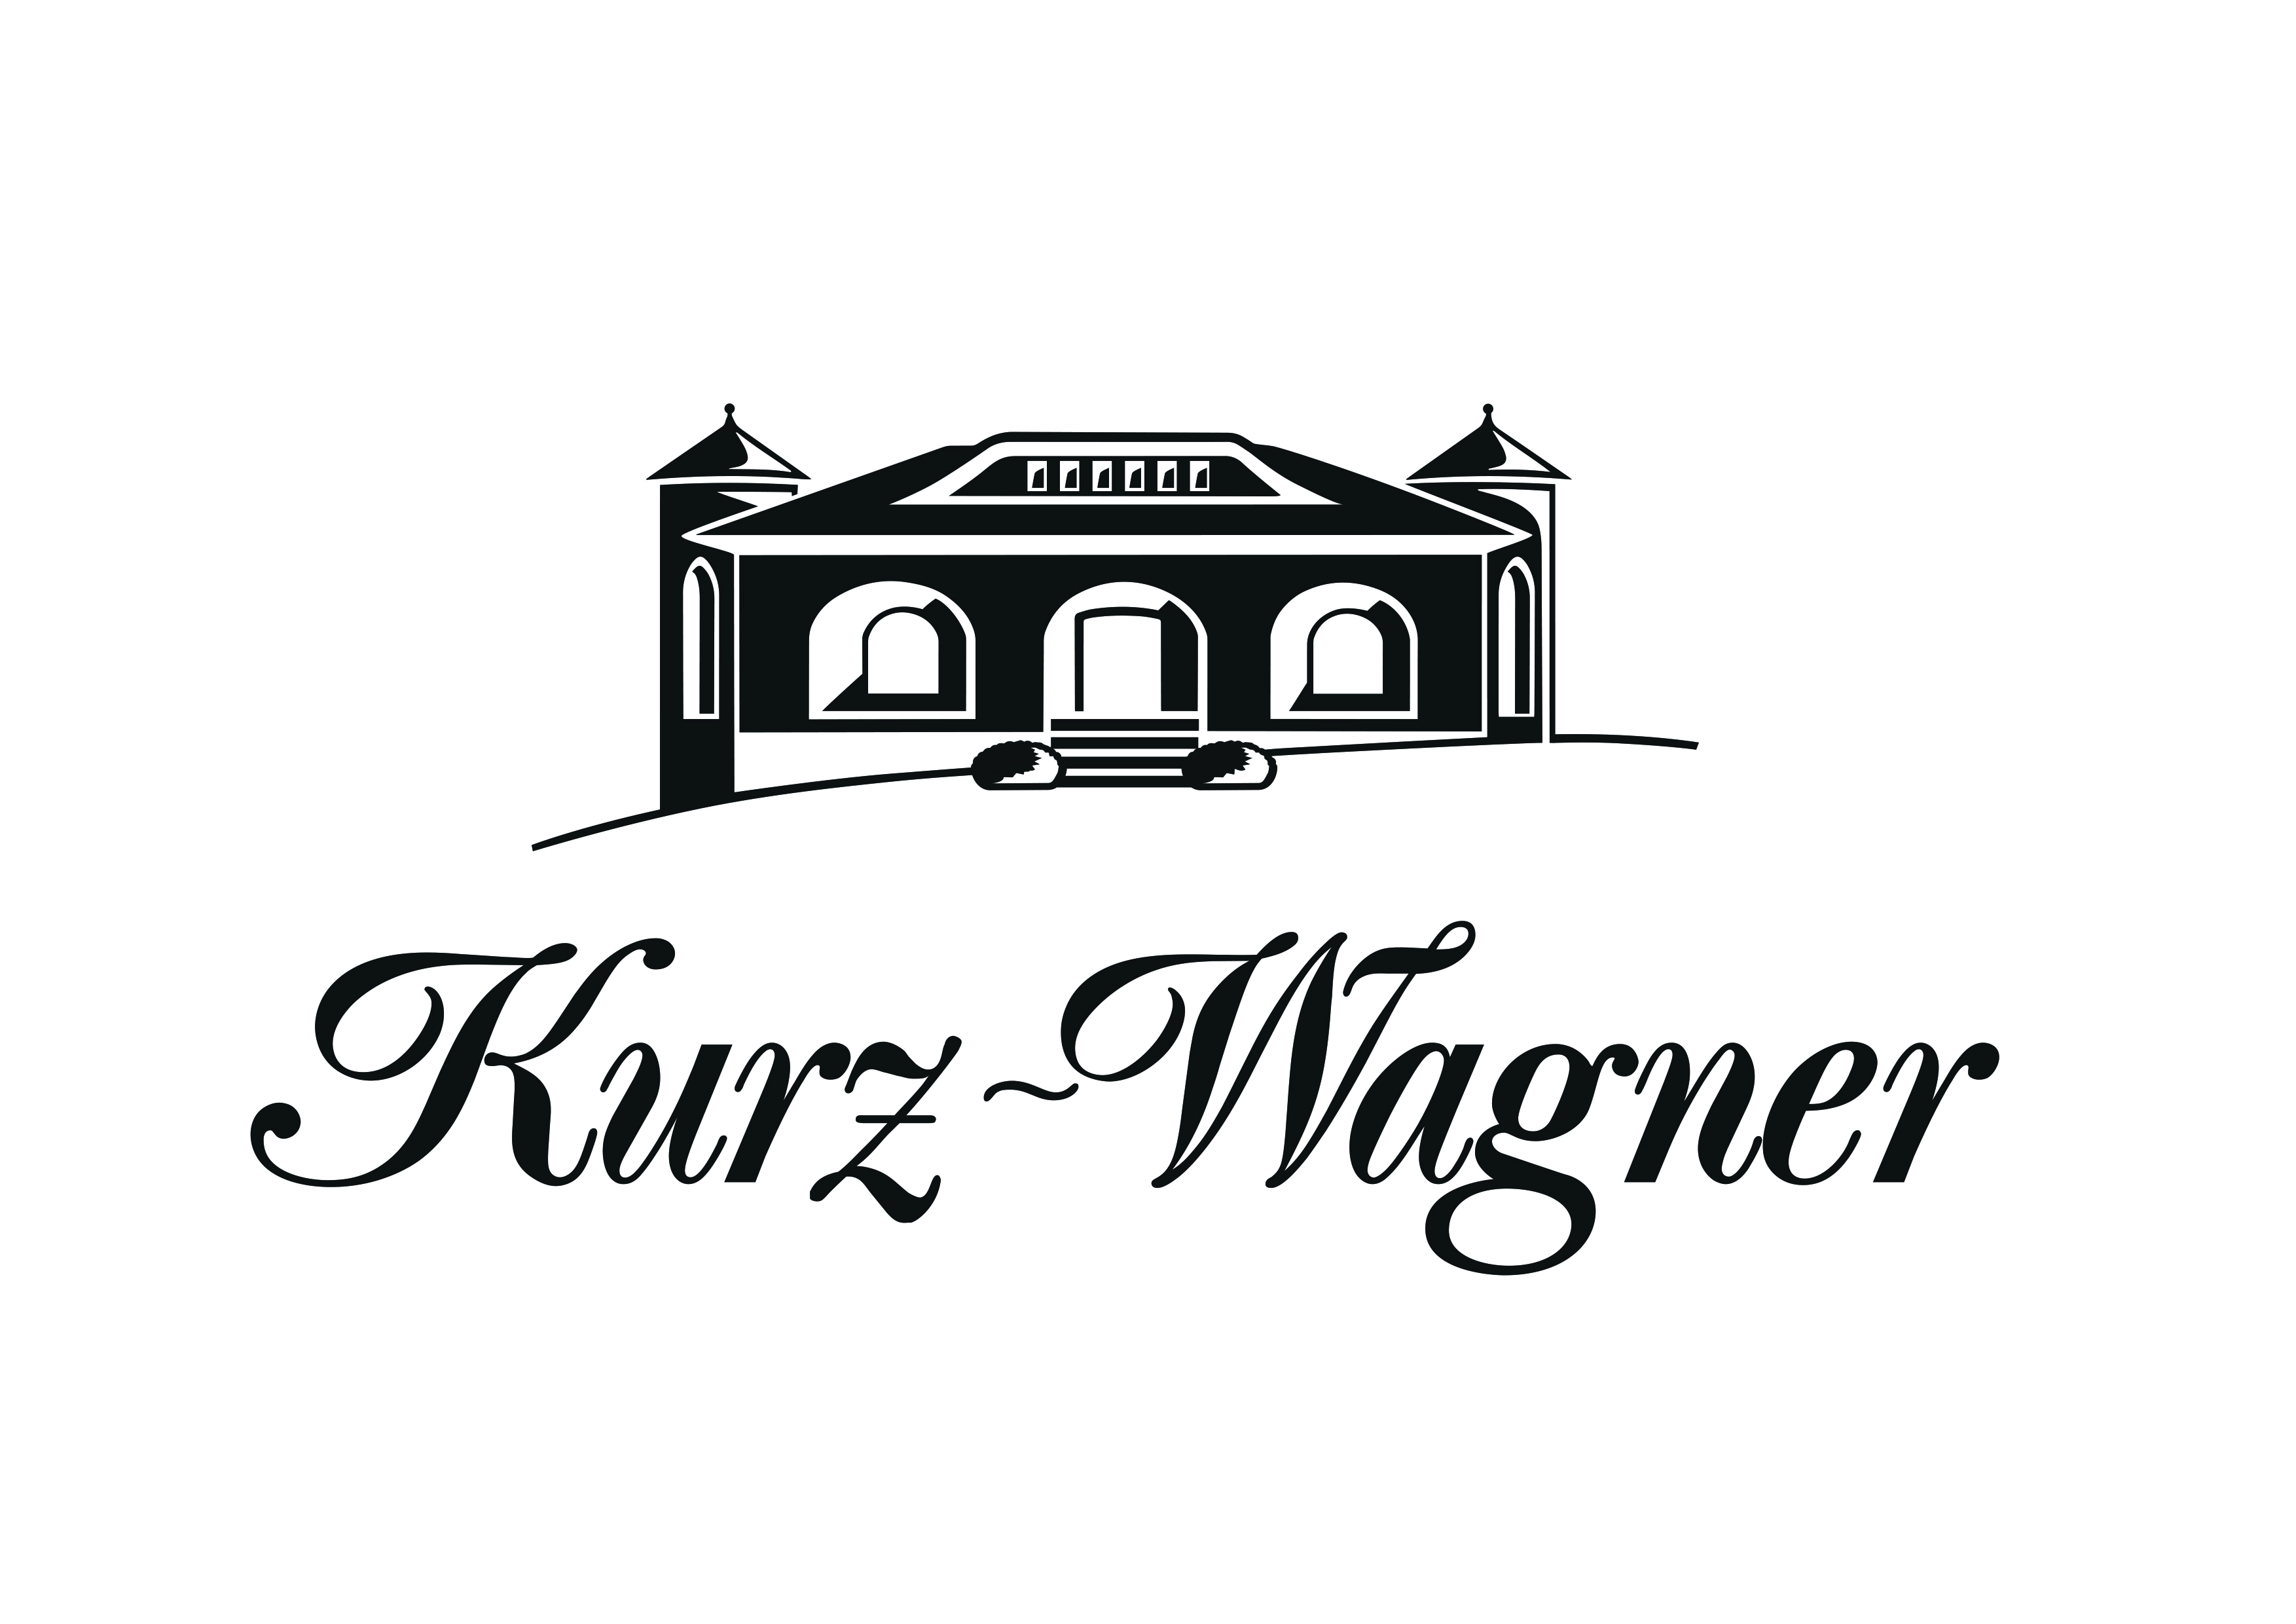 Weingut Kurz-Wagner